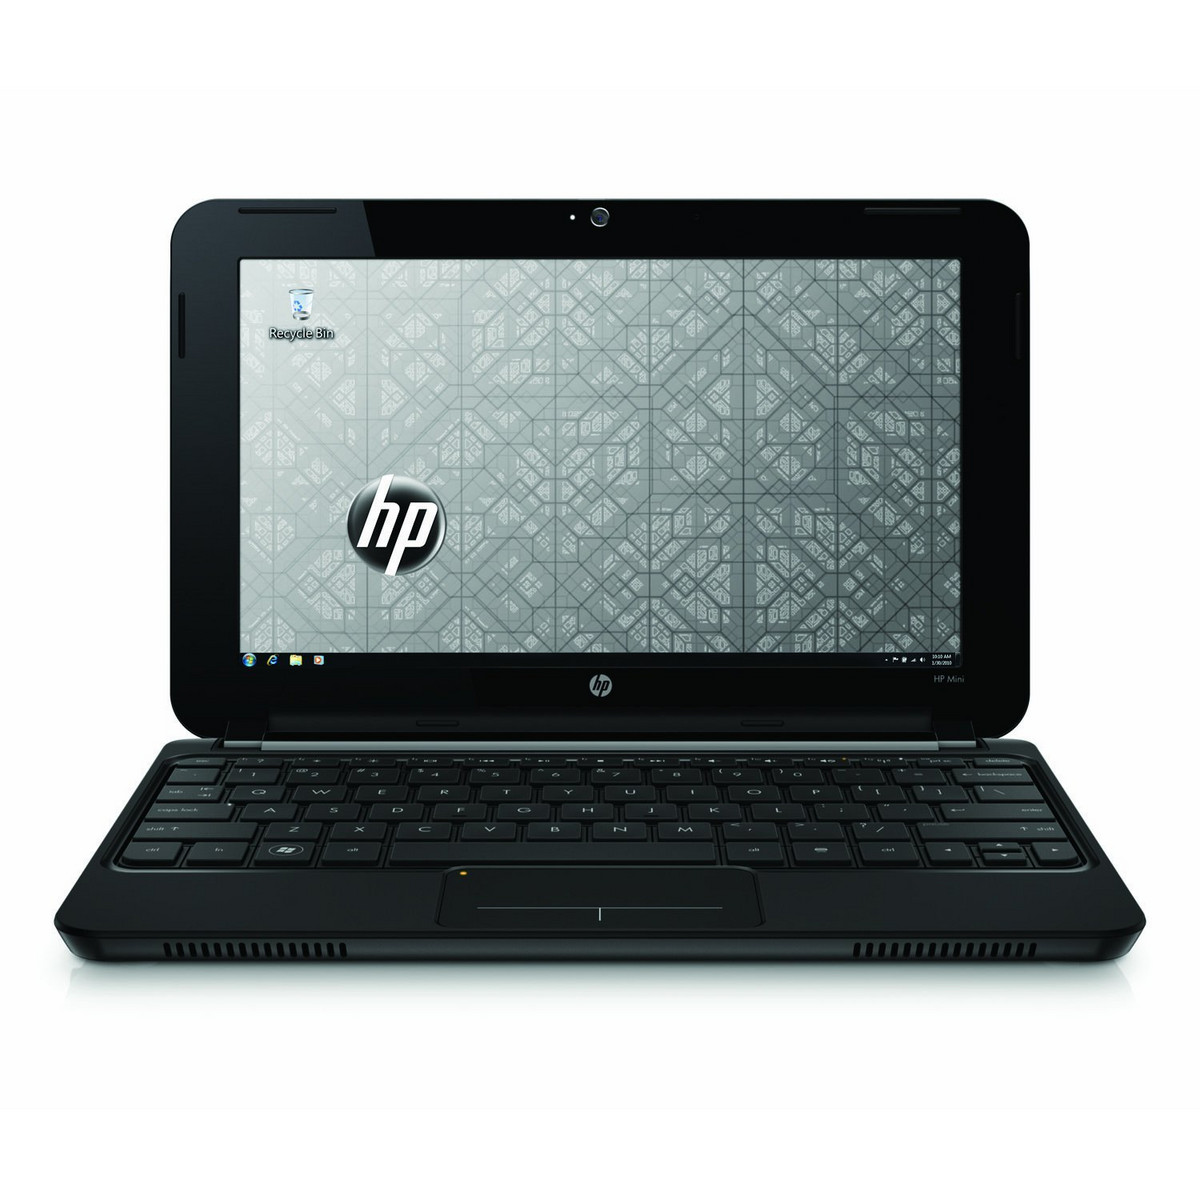 Vesting kalf Temerity HP Mini 210-3000sa - Notebookcheck.net External Reviews